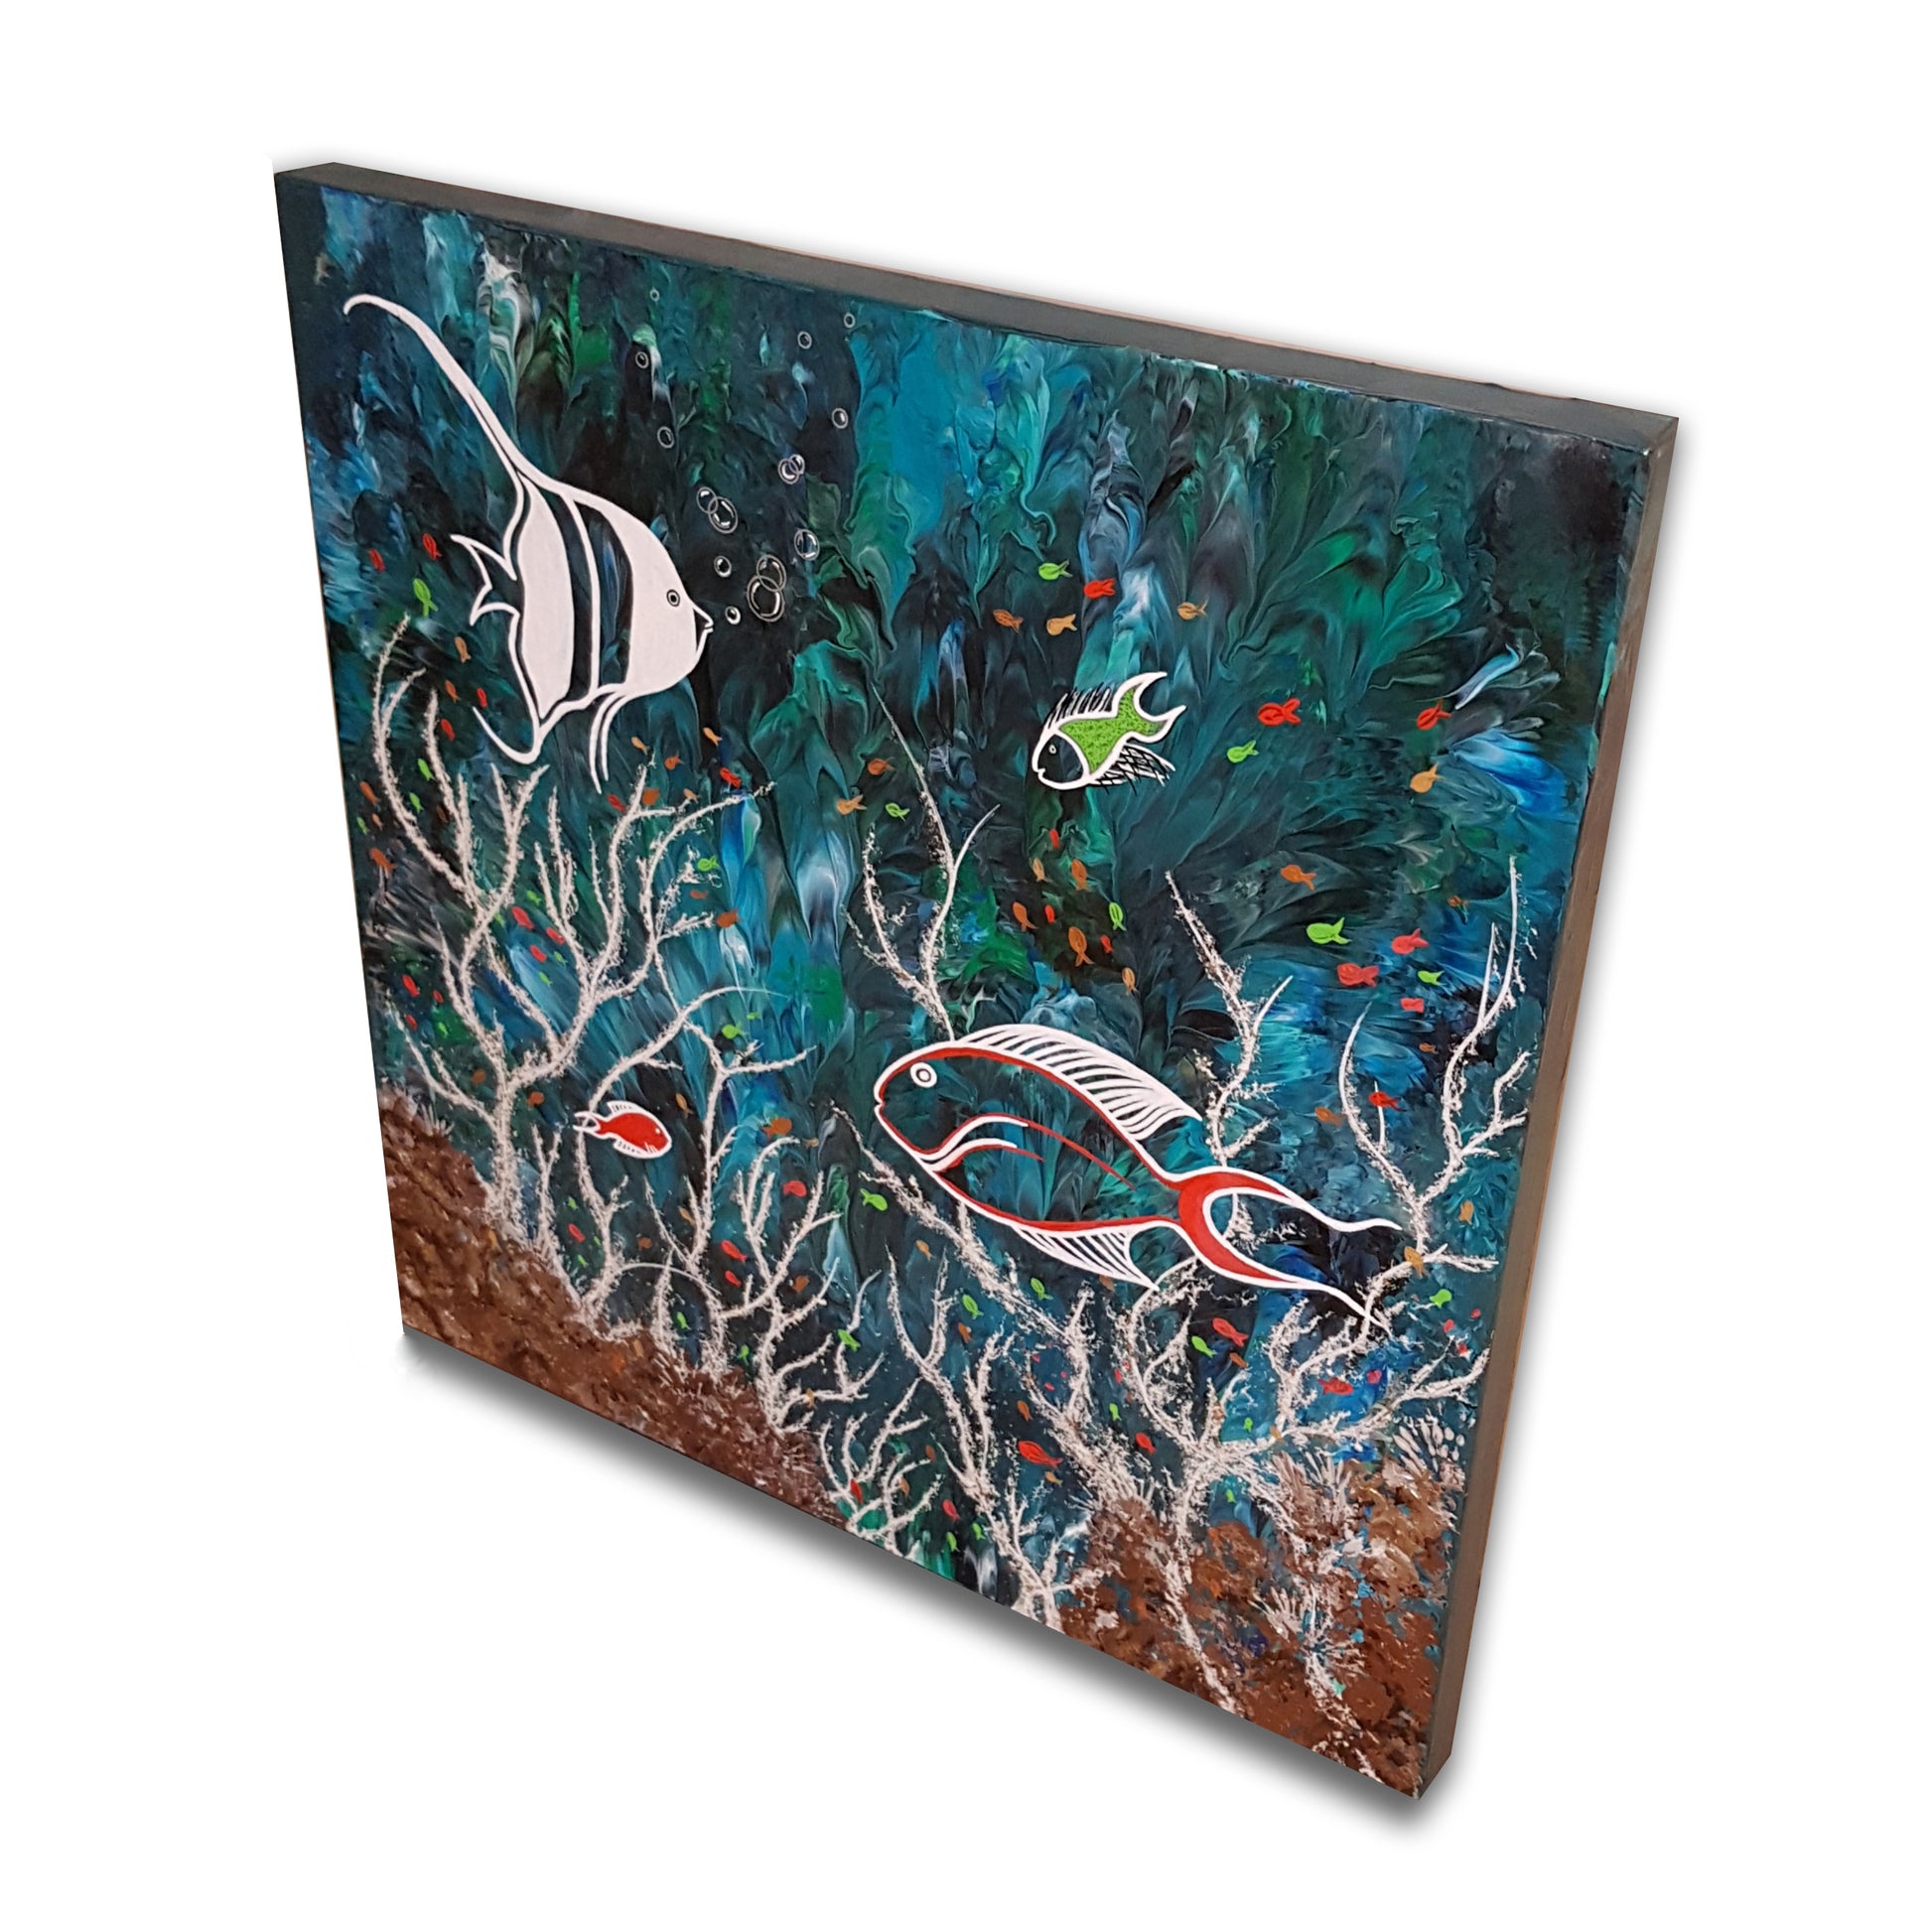 Paradise-Reef-Alexandra-Romano-Art-Buy-Art-Online-Beautiful-Painting-of-Fish-Unique-Home-Decor-Contemporary-Statement-Piece-Modern-Mixed-Media